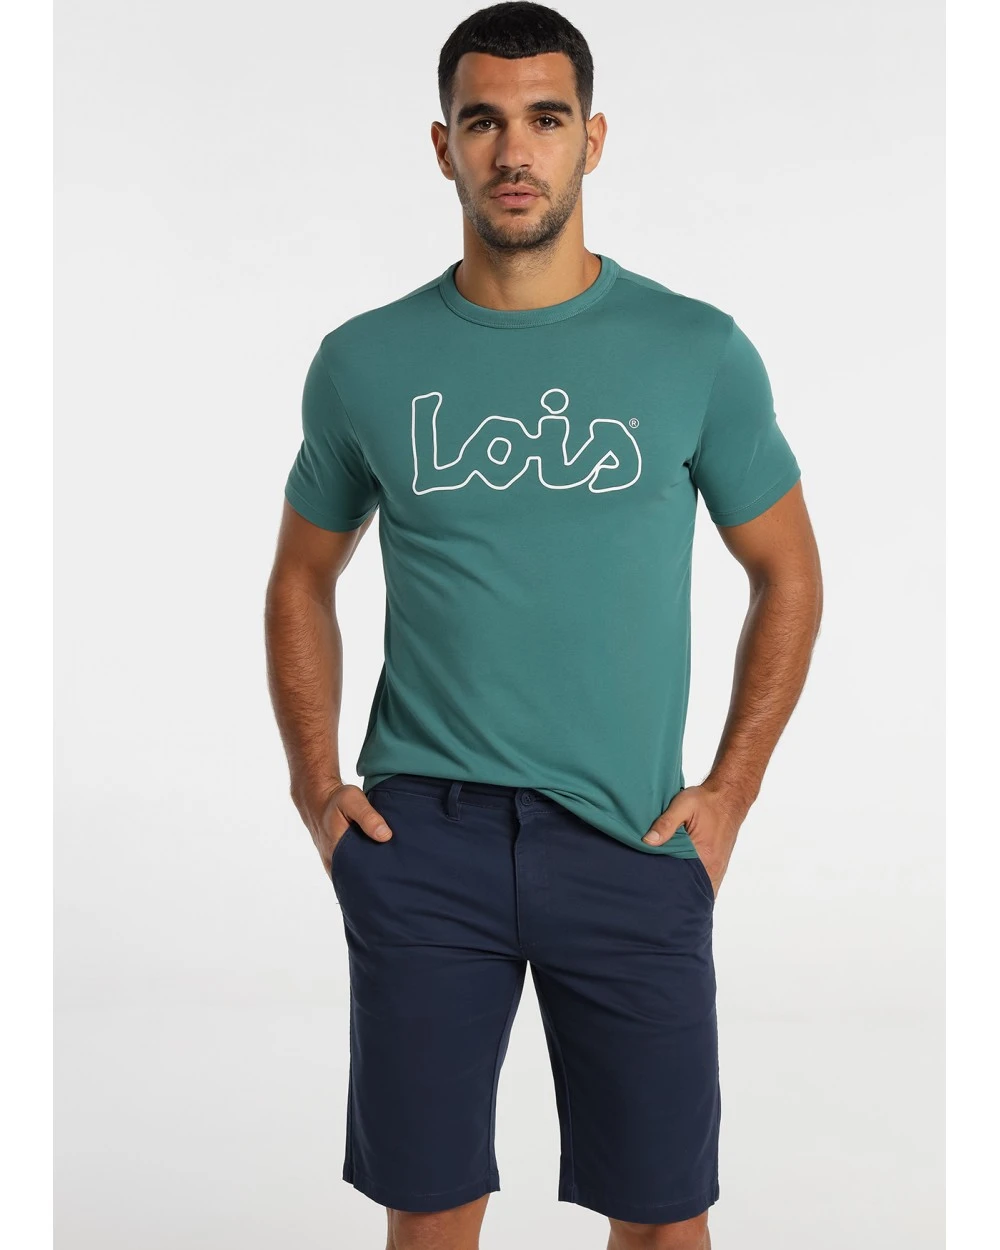 Lois Jeans-short Sleeve T-shirt Text Orange Spritz - Sf - T-shirts -  AliExpress